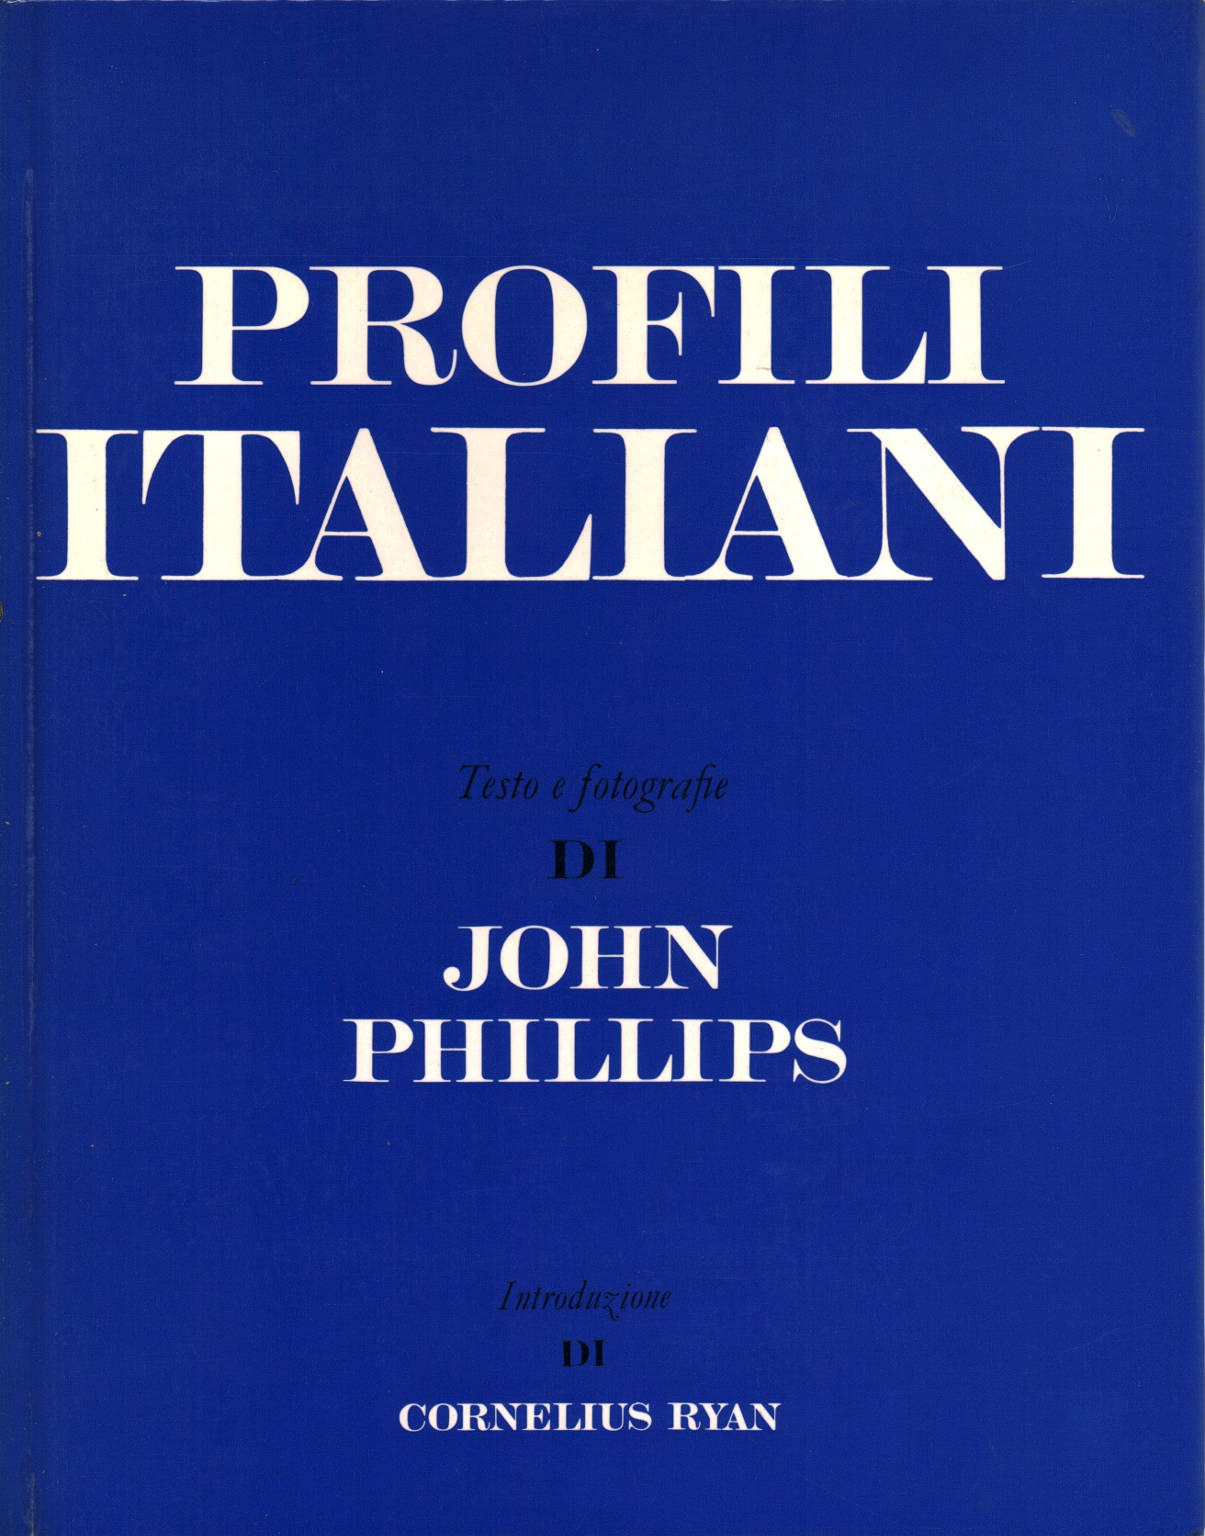 Profili italiani, John Phillips